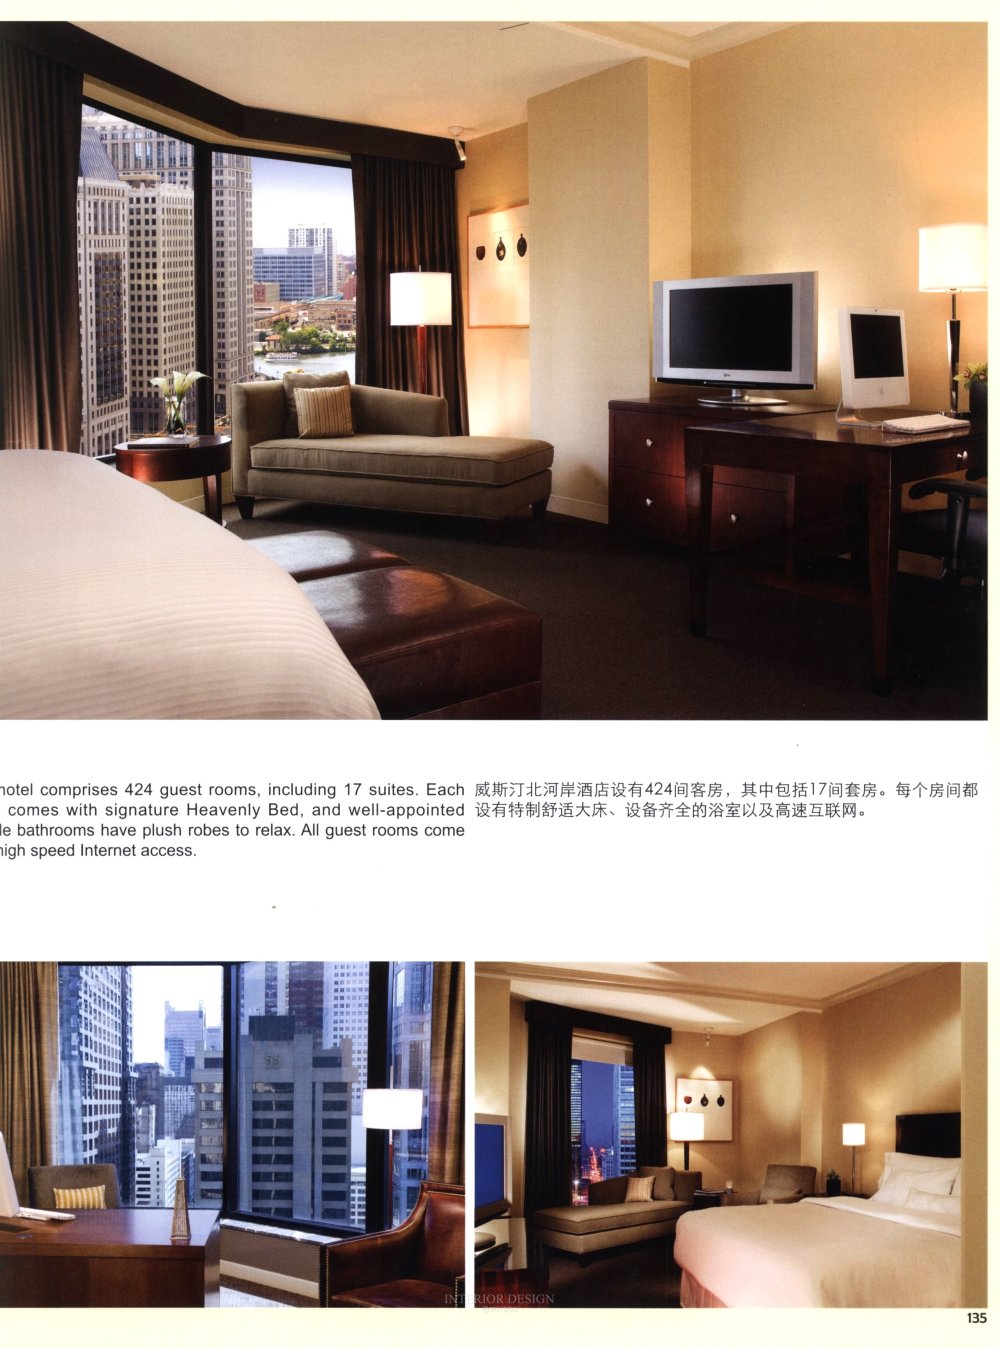 101全球酒店客房 101HOTELS GUEST ROOMS_图站_AiJpgg_com_130.jpg